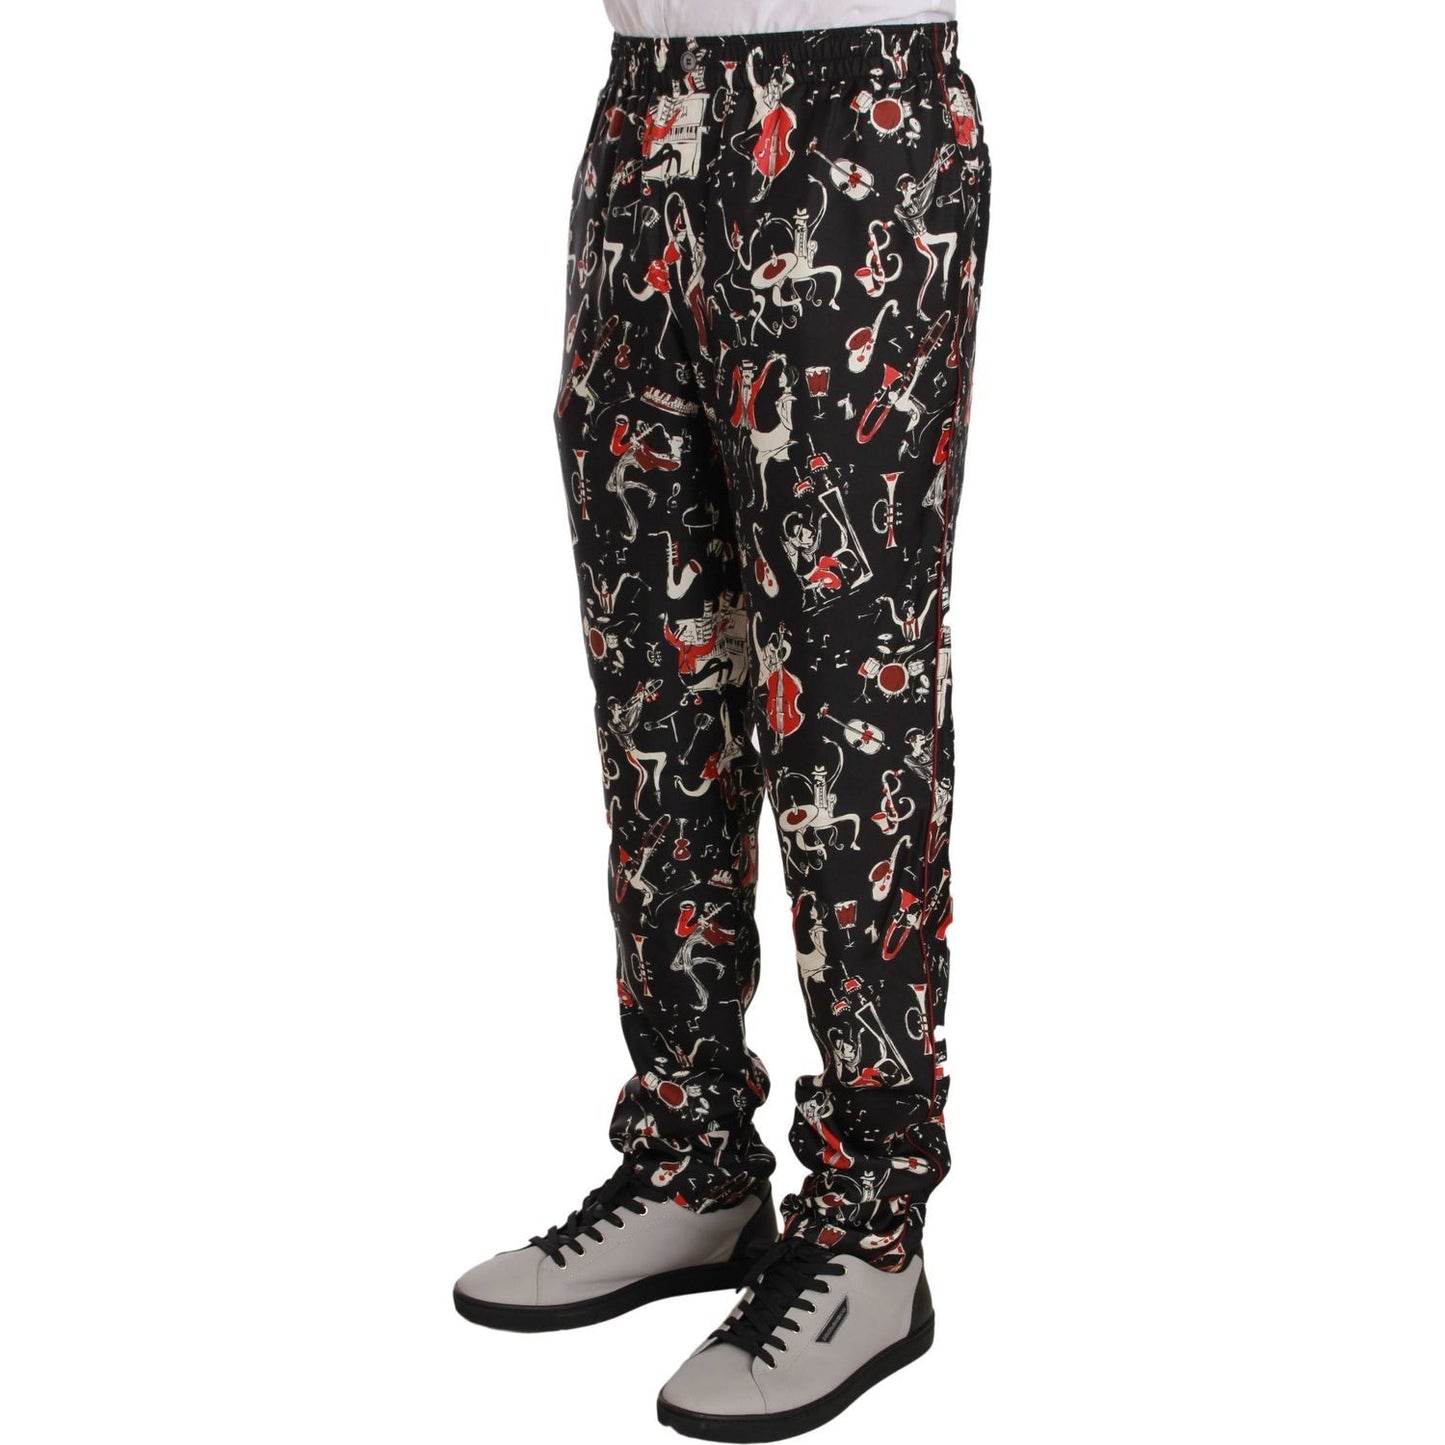 Dolce & Gabbana Elegant Black Silk Lounge Pants with Red Print red-musical-instrument-print-sleepwear-pants IMG_0035-2-scaled.jpg